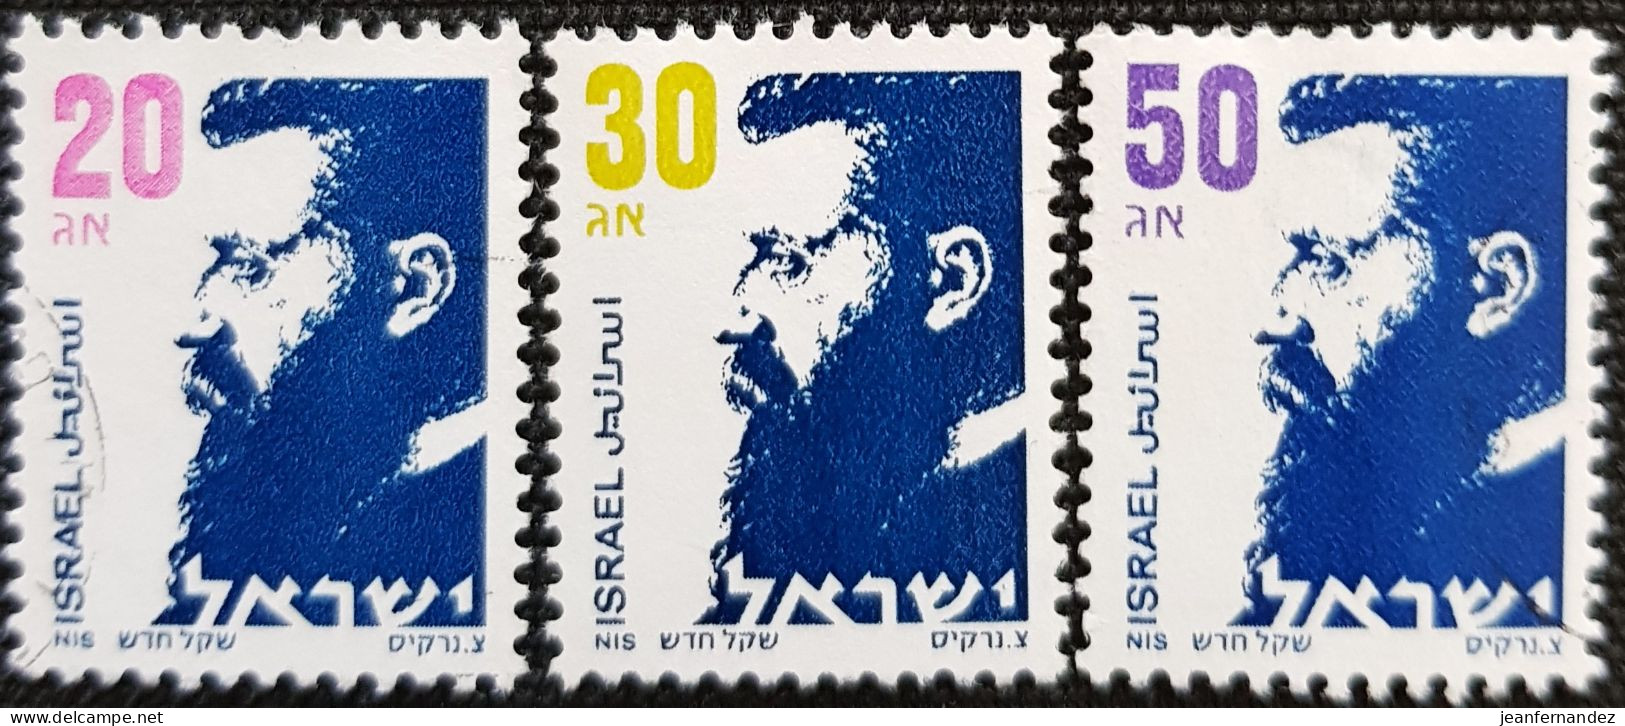 Israel 1986 Definitive - Dr Theodor Herzl  Stampworld N° 1020 à 1022 - Gebruikt (zonder Tabs)